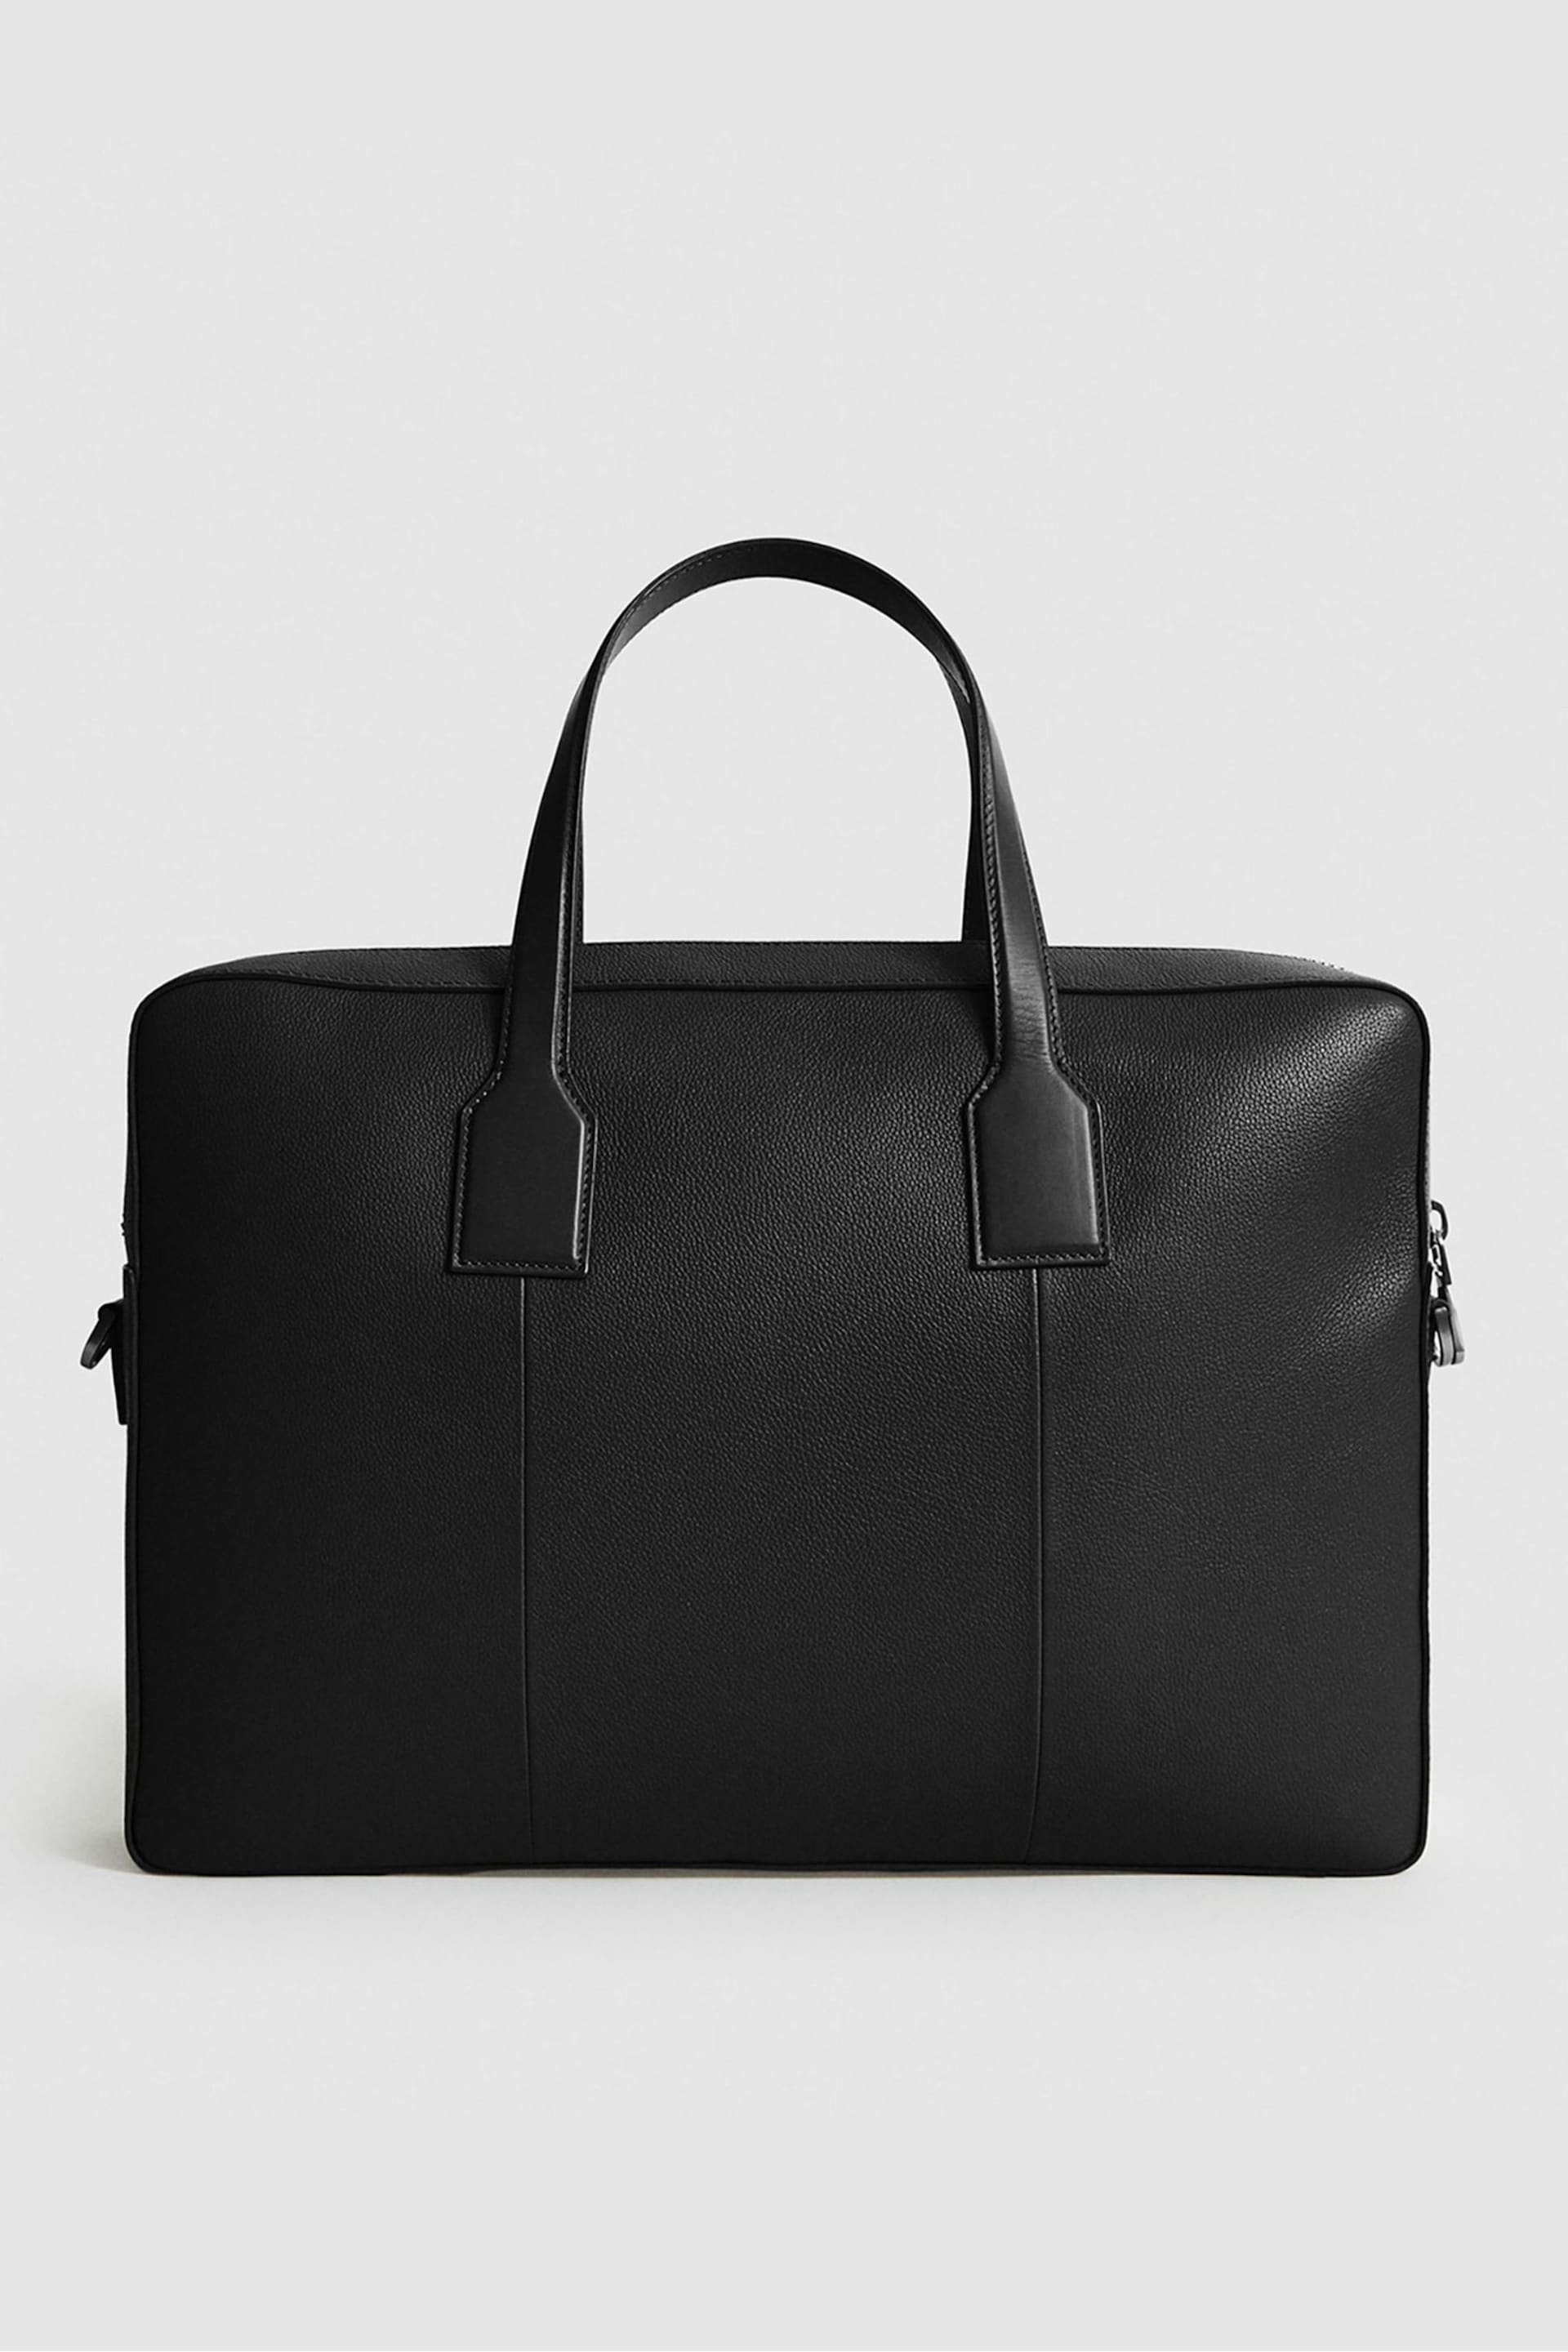 Reiss Black Elliott Leather Briefcase - Image 5 of 5